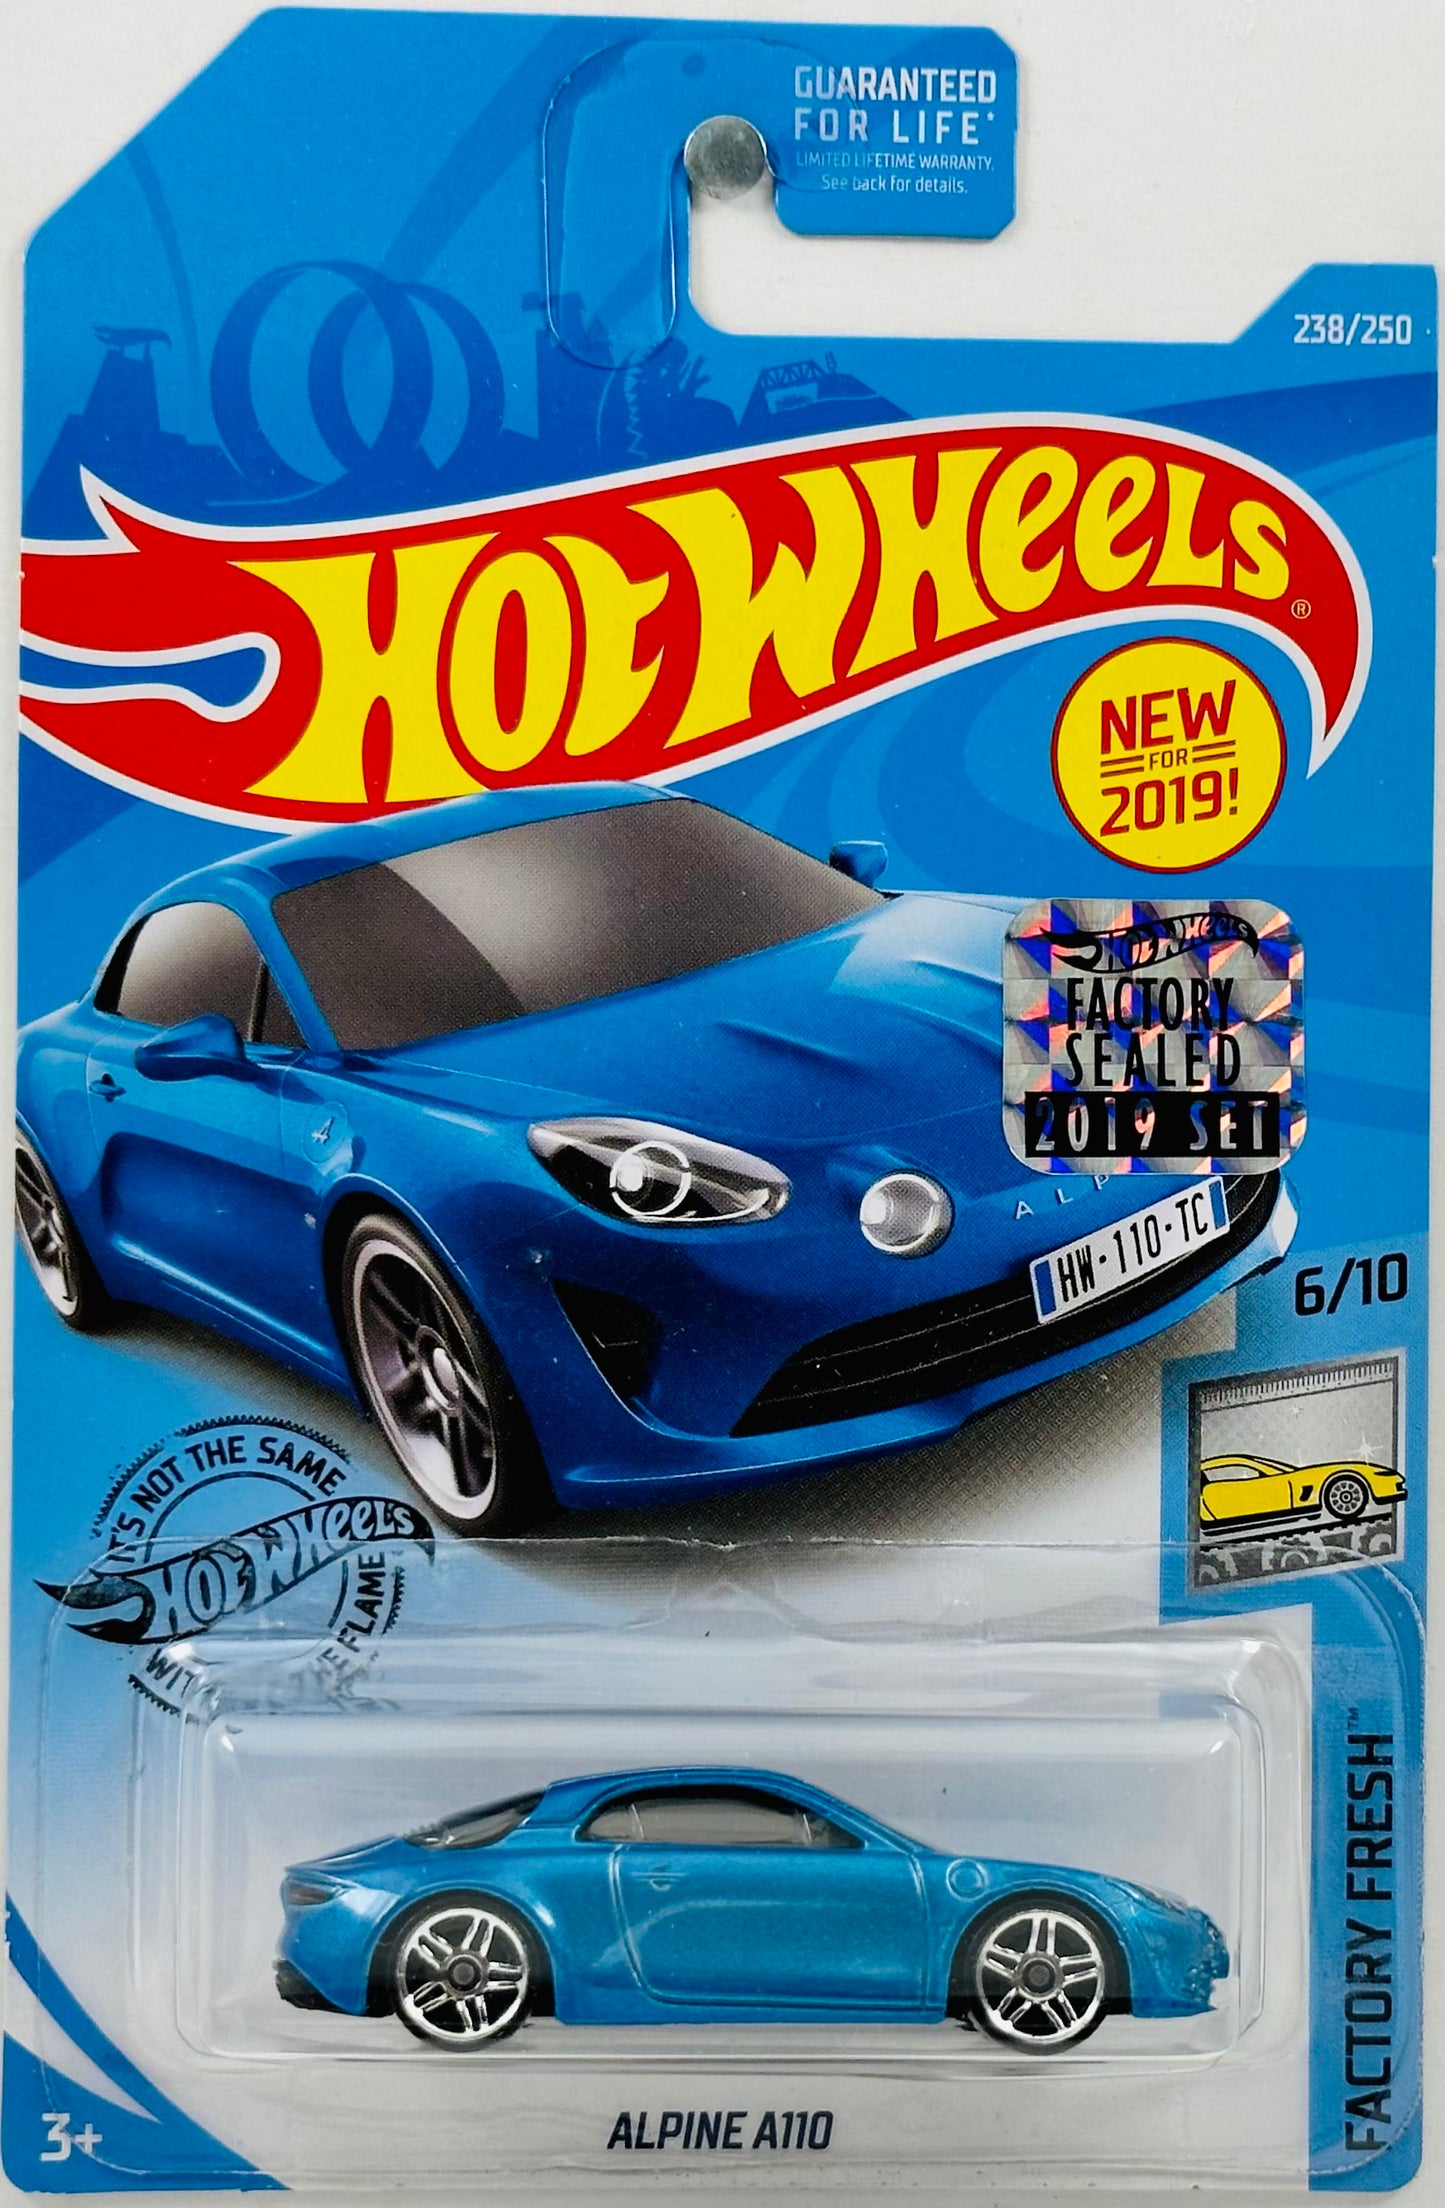 Hot Wheels 2019 - Collector # 238/250 - Factory Fresh 06/10 - New Models - Alpine A110 - Blue - 5 Spoke Wheels - FCS